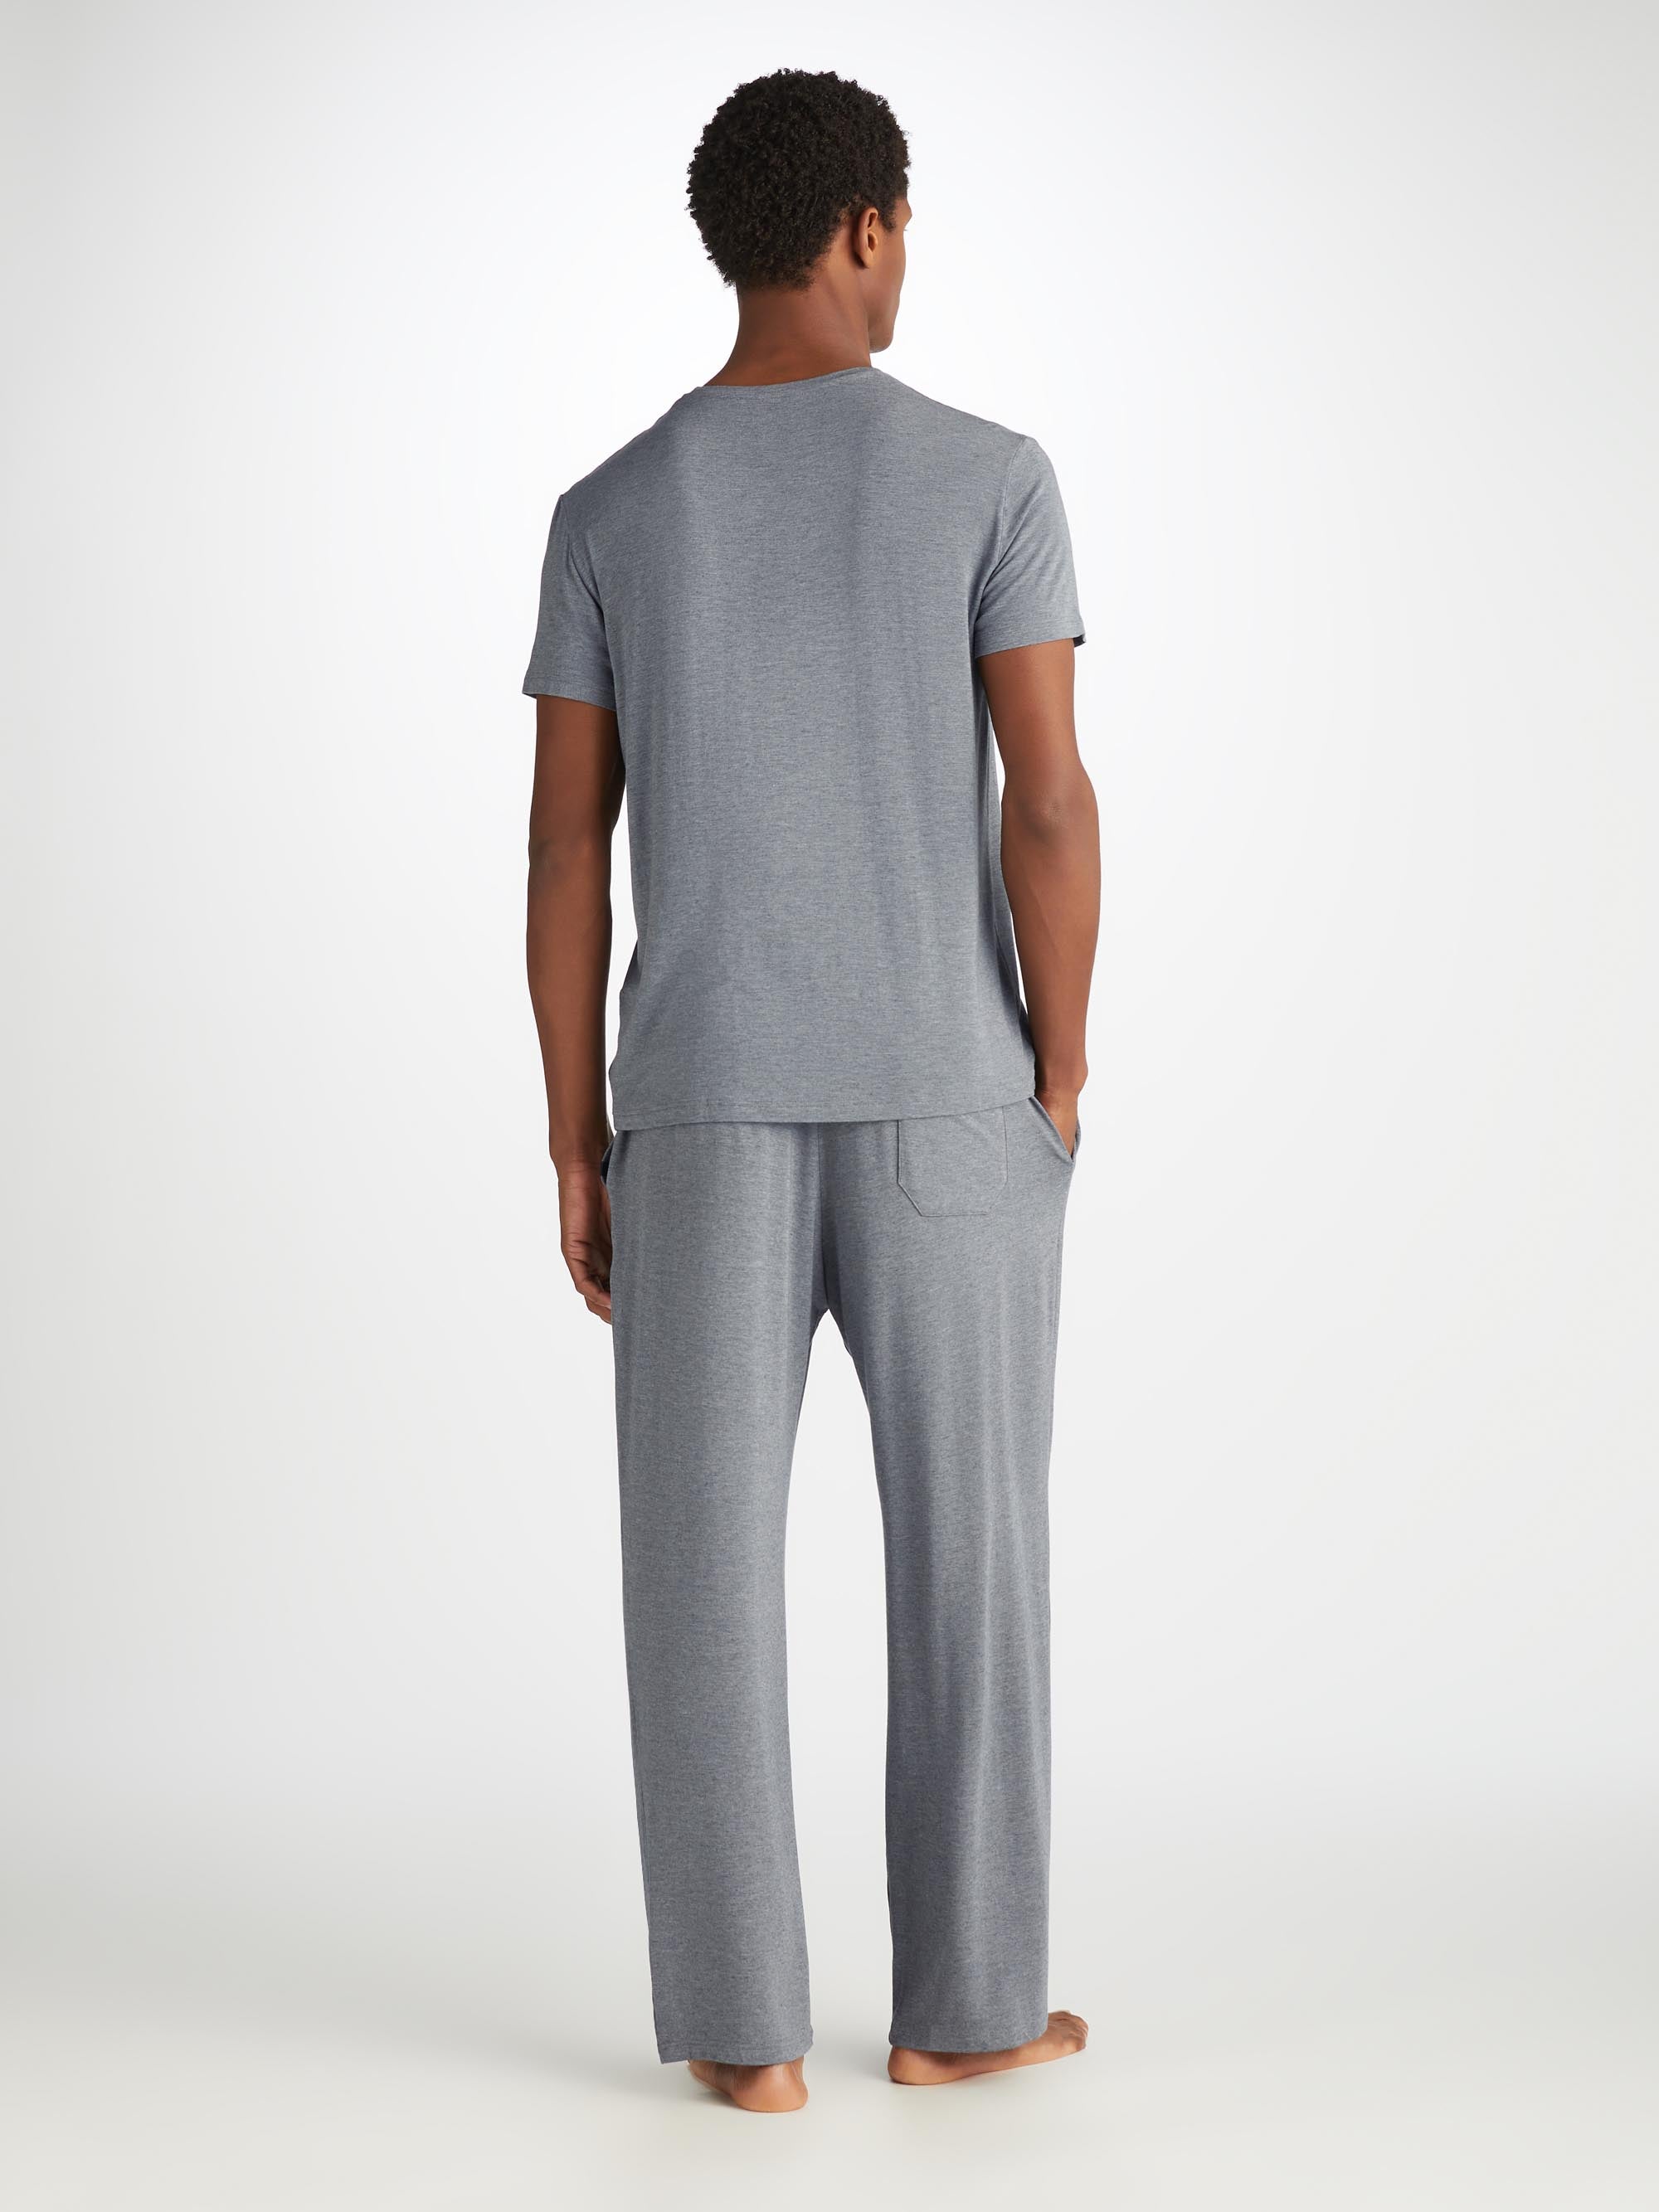 Men's Lounge Trousers Marlowe Micro Modal Stretch Charcoal